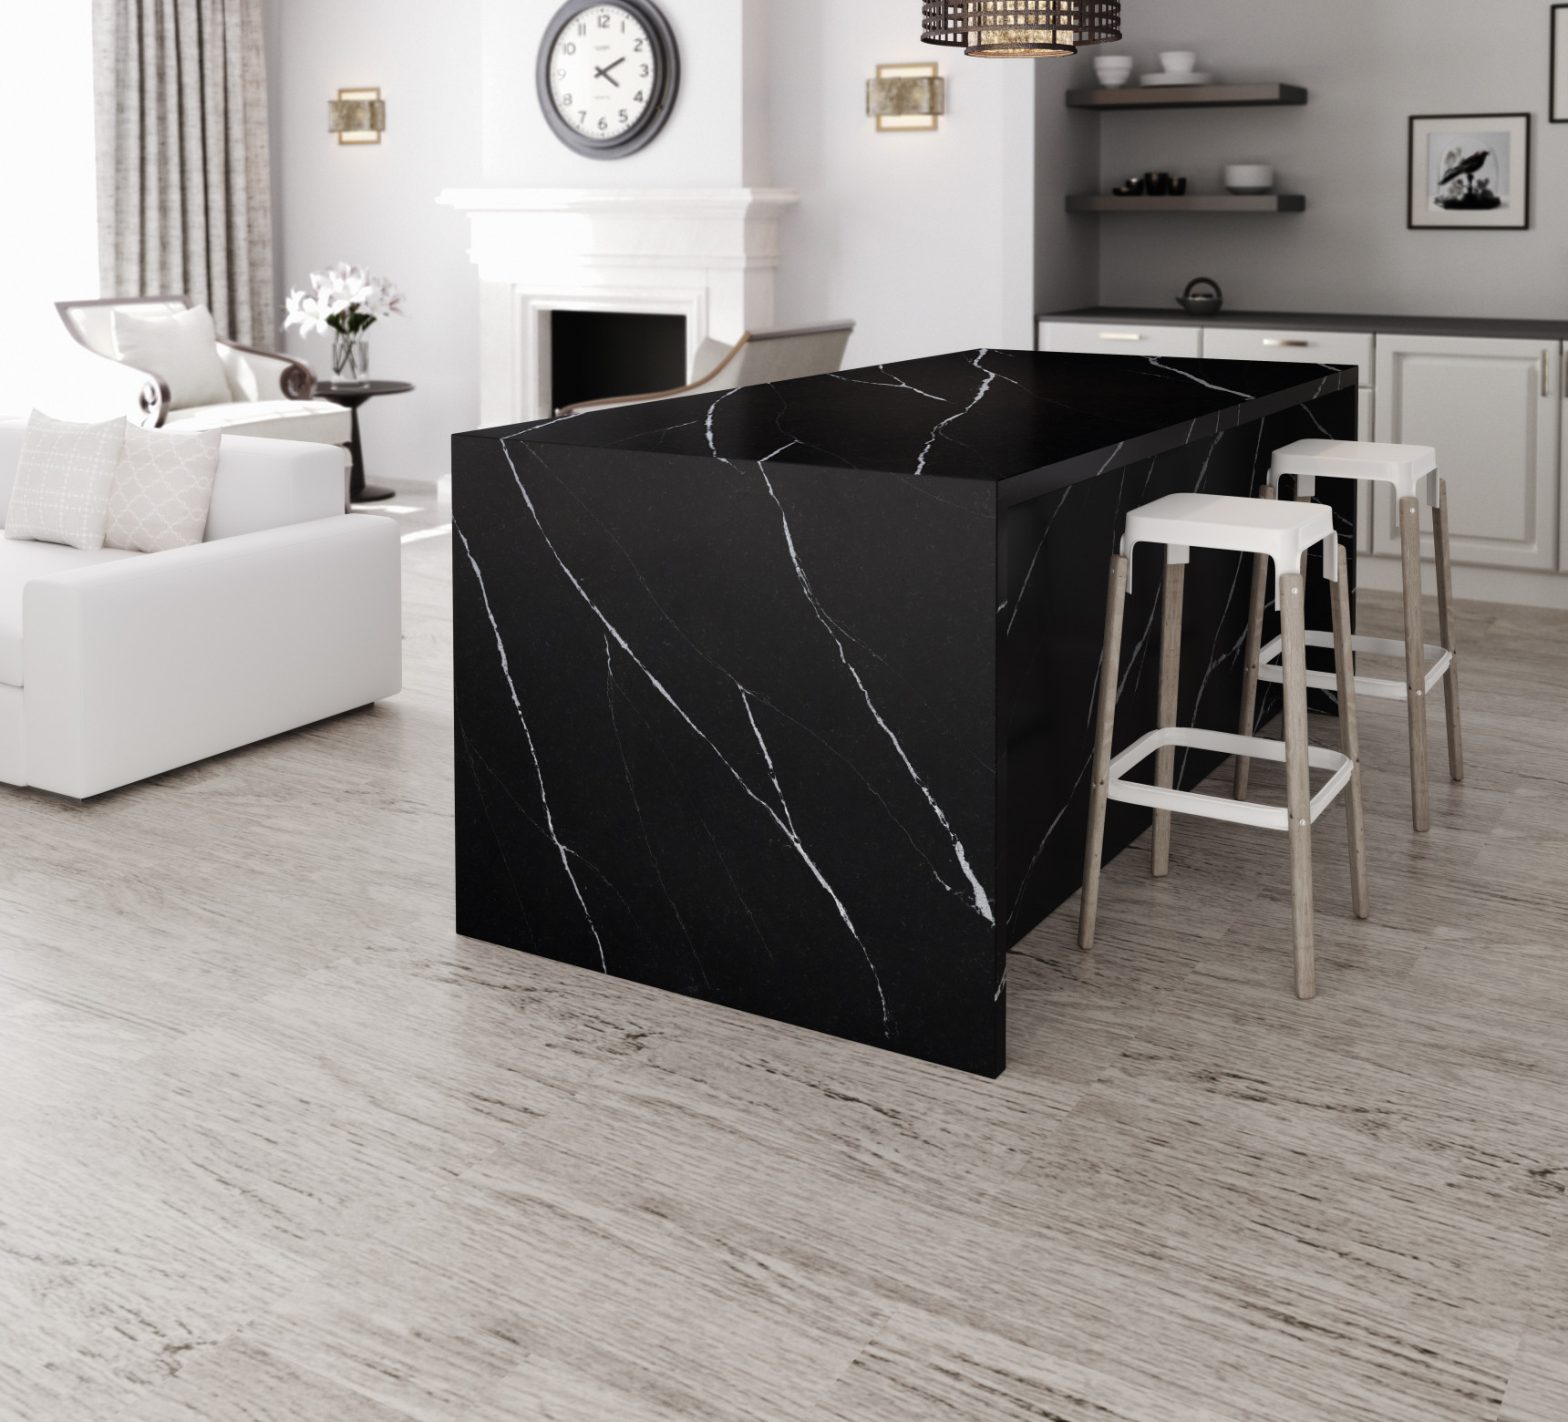 Black Silestone quartz worktop with white veining